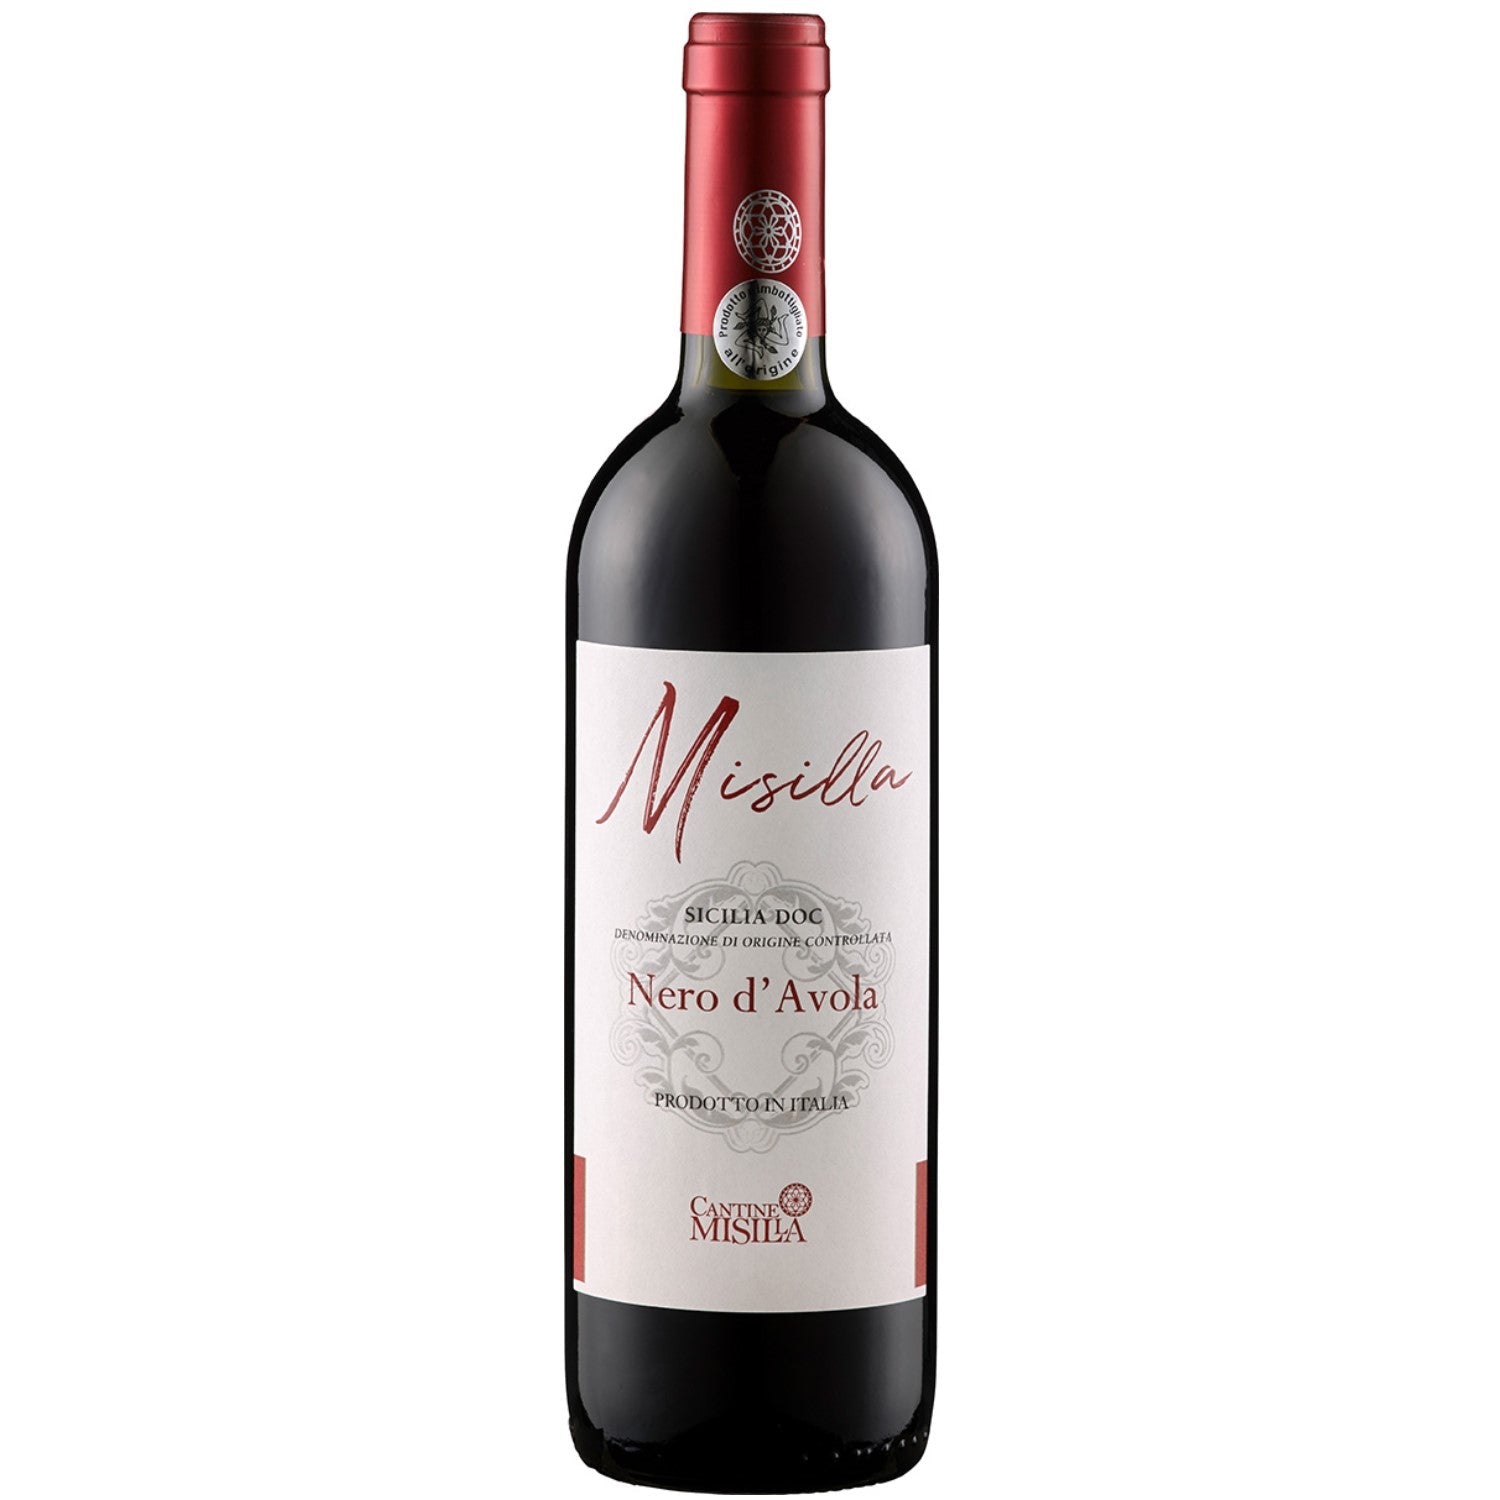 Misilla Nero d'Avola IGP Terre Siciliane Rotwein Wein Trocken Italien (3 x 0.75l) - Versanel -